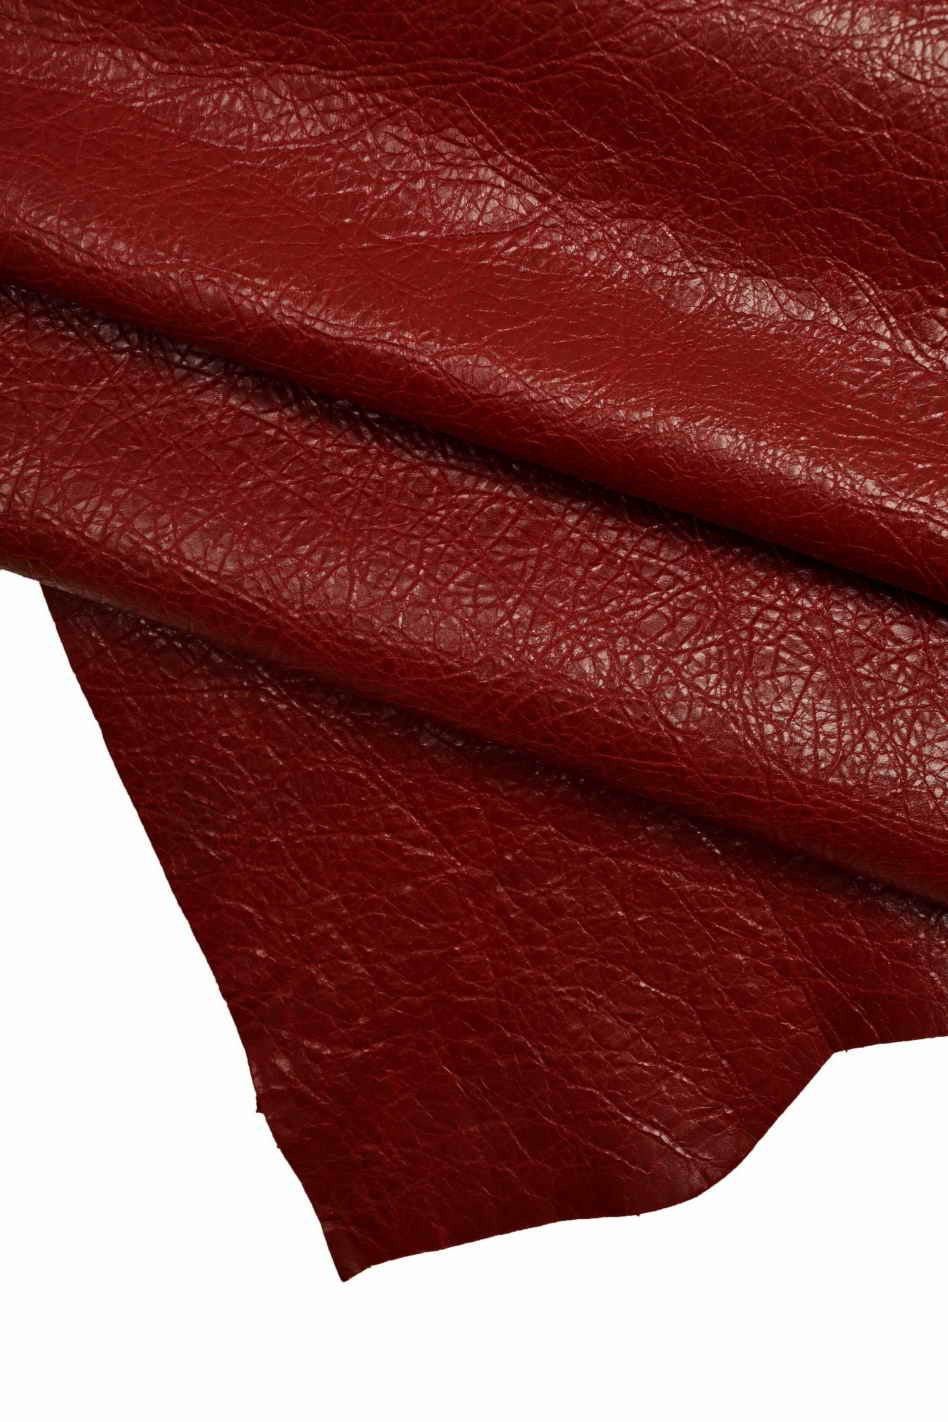 https://www.lagarzarara.com/16312-thickbox_default/-dark-red-pebble-grain-goatskin-italian-leather-wrinkled-distressed-skin-shiny-soft-vintage-hide-for-crafters.jpg